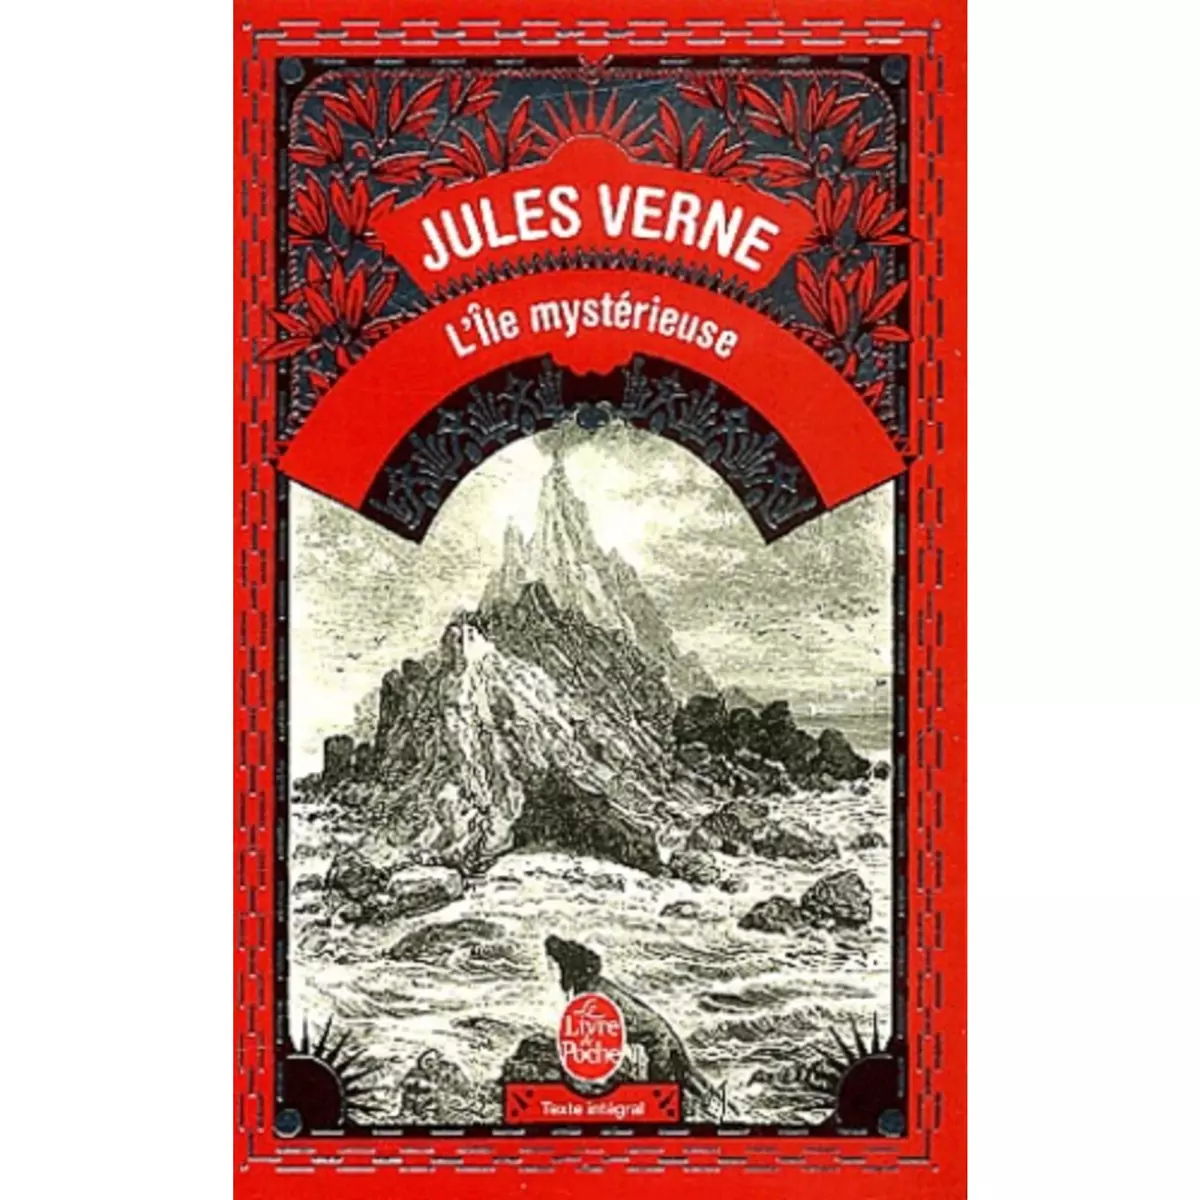  L'ILE MYSTERIEUSE, Verne Jules